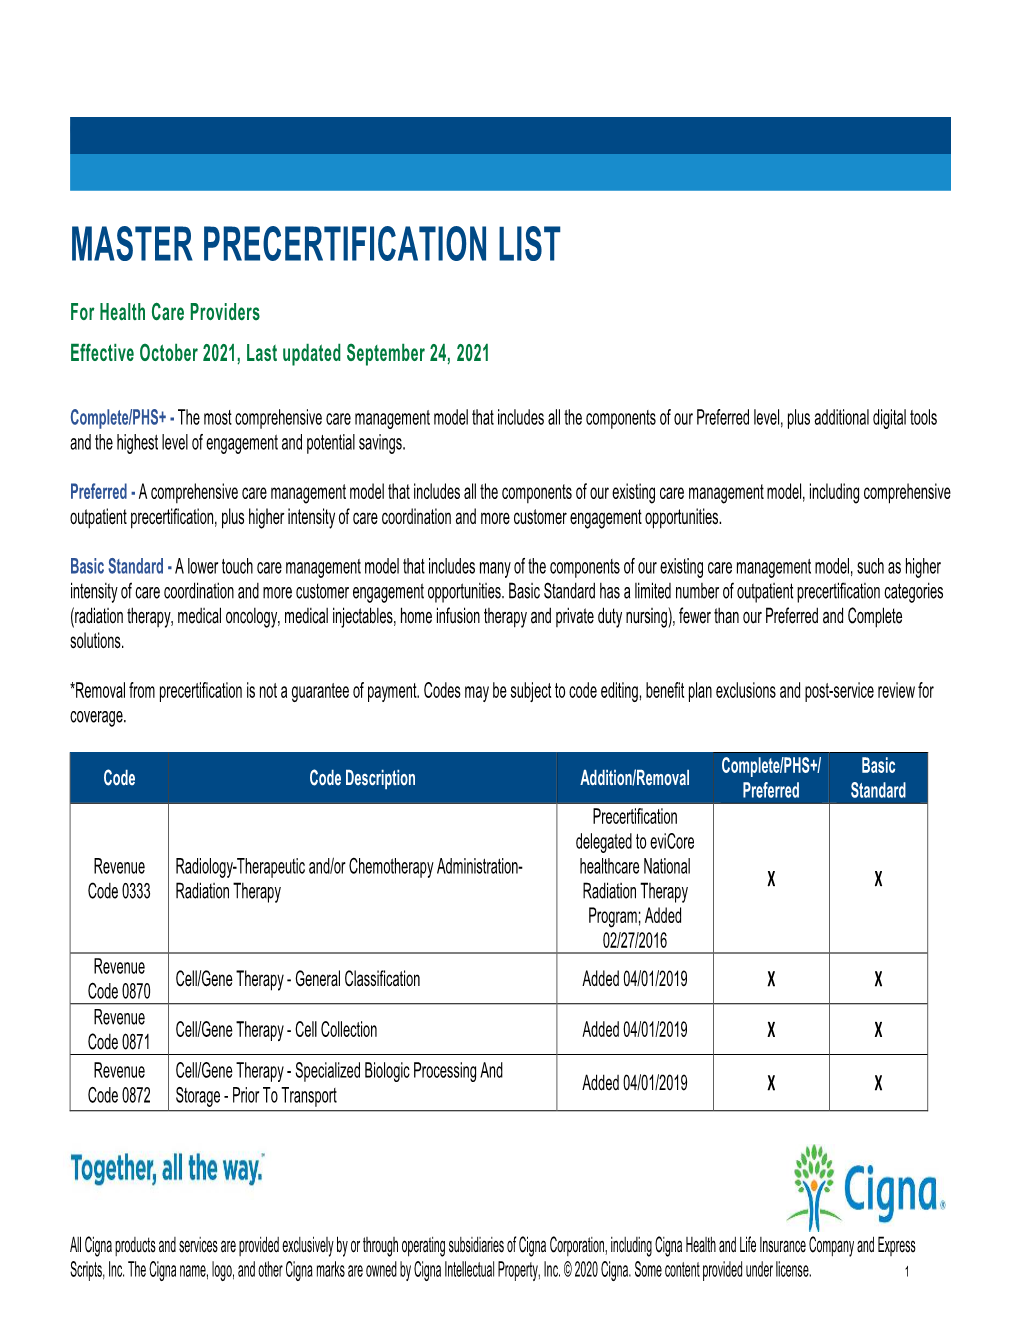 Master Precertification List